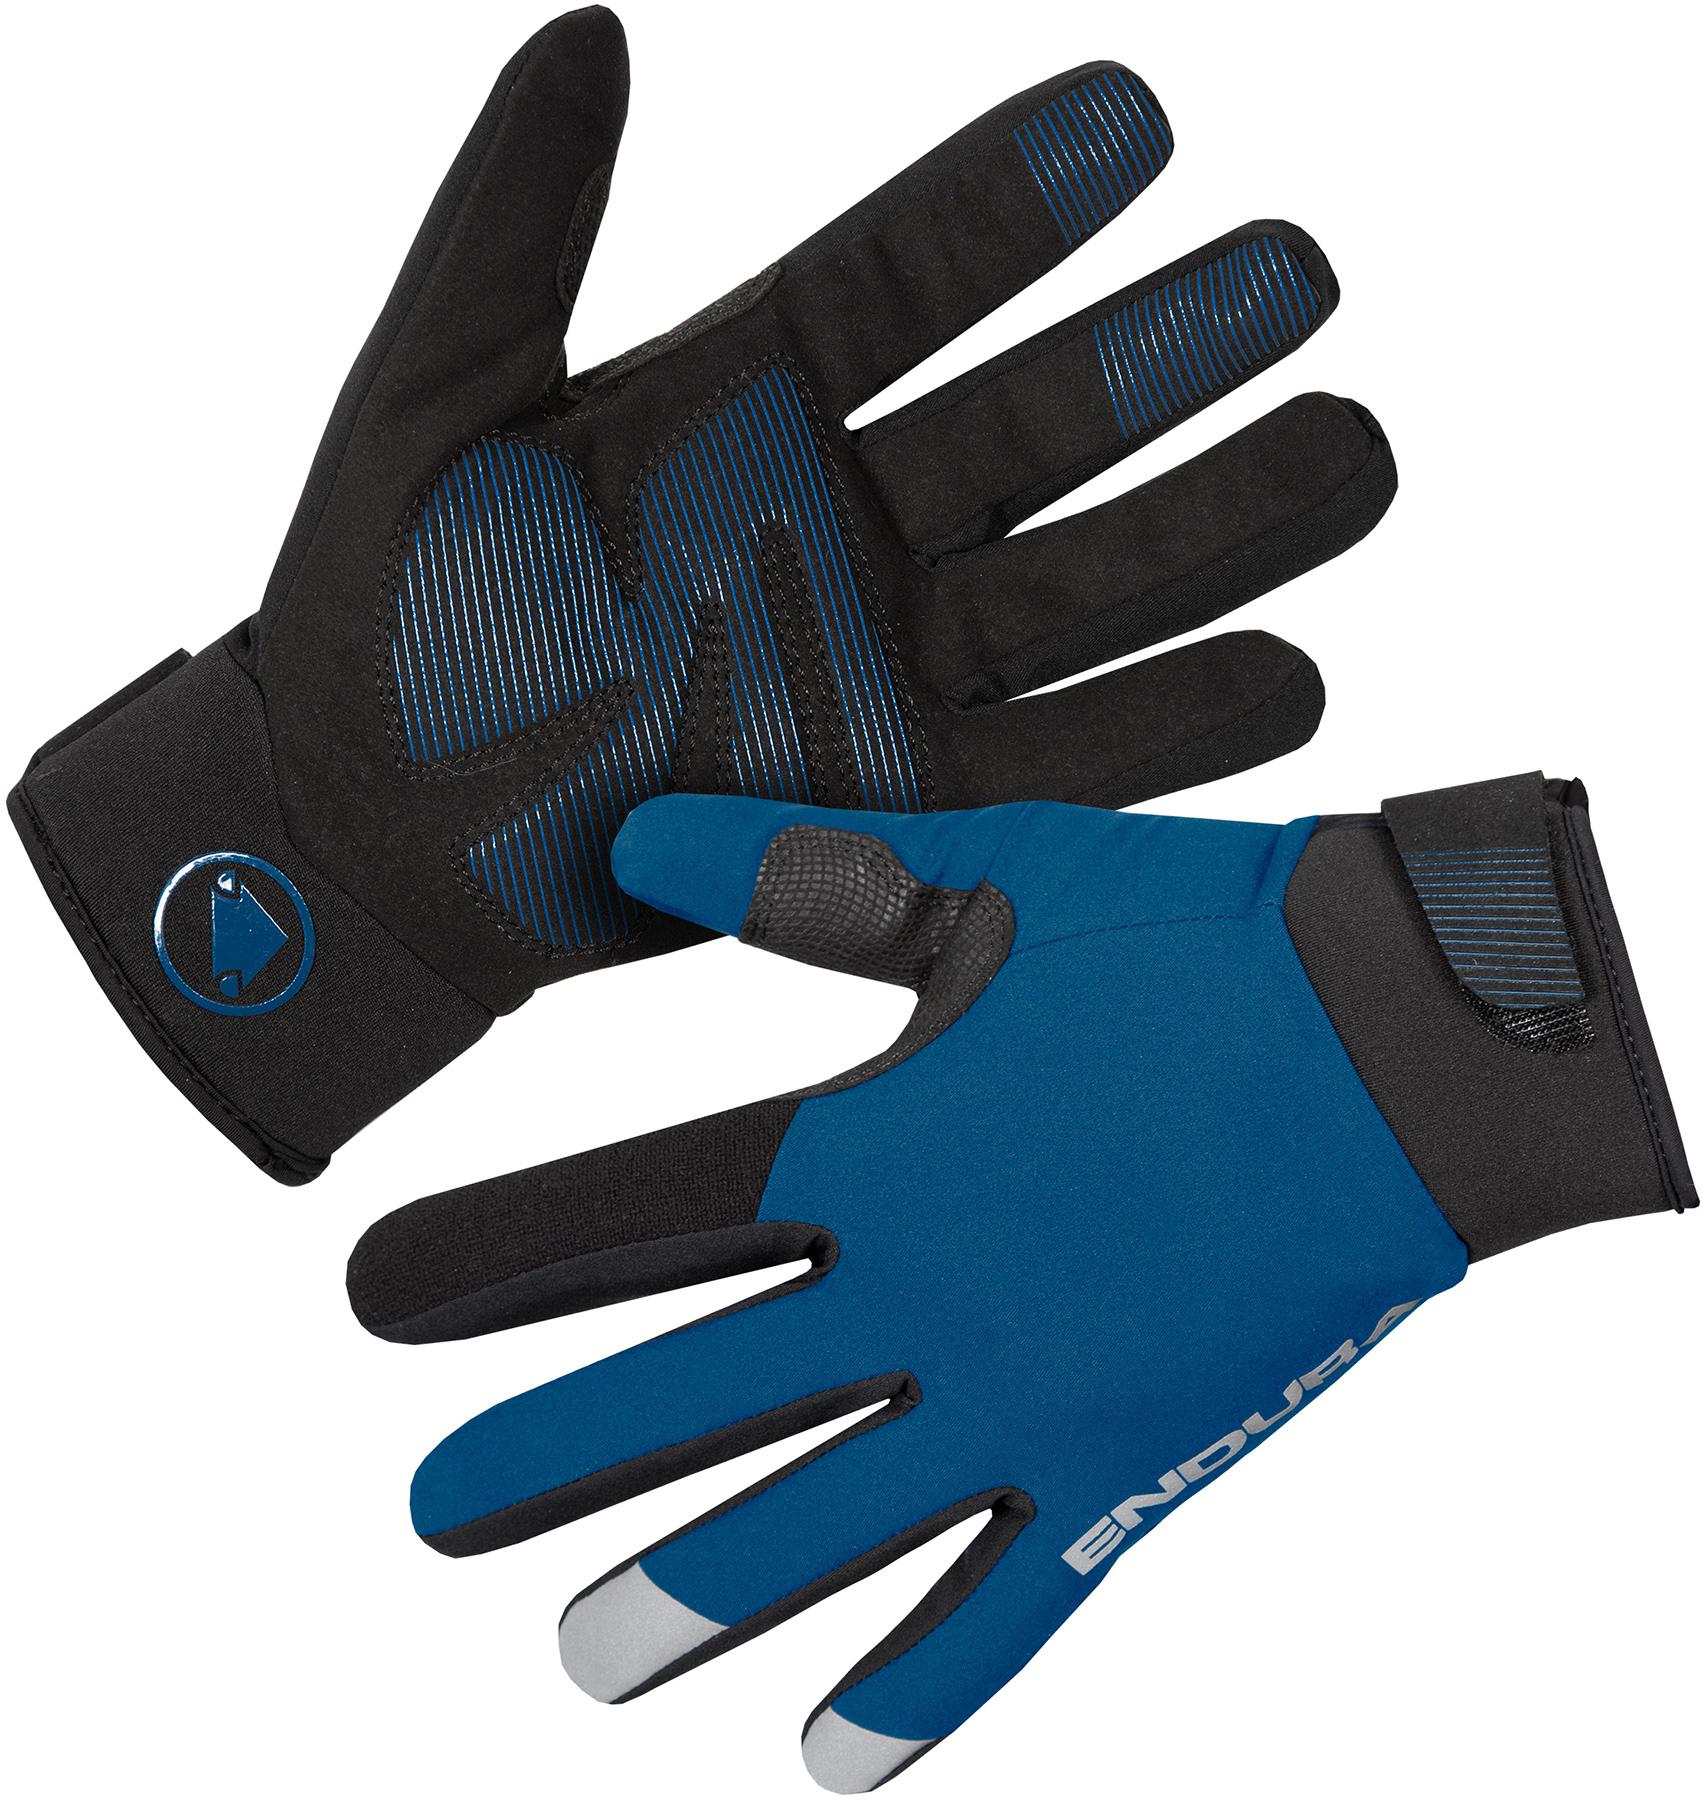 Endura Strike Waterproof Gloves - Blueberry